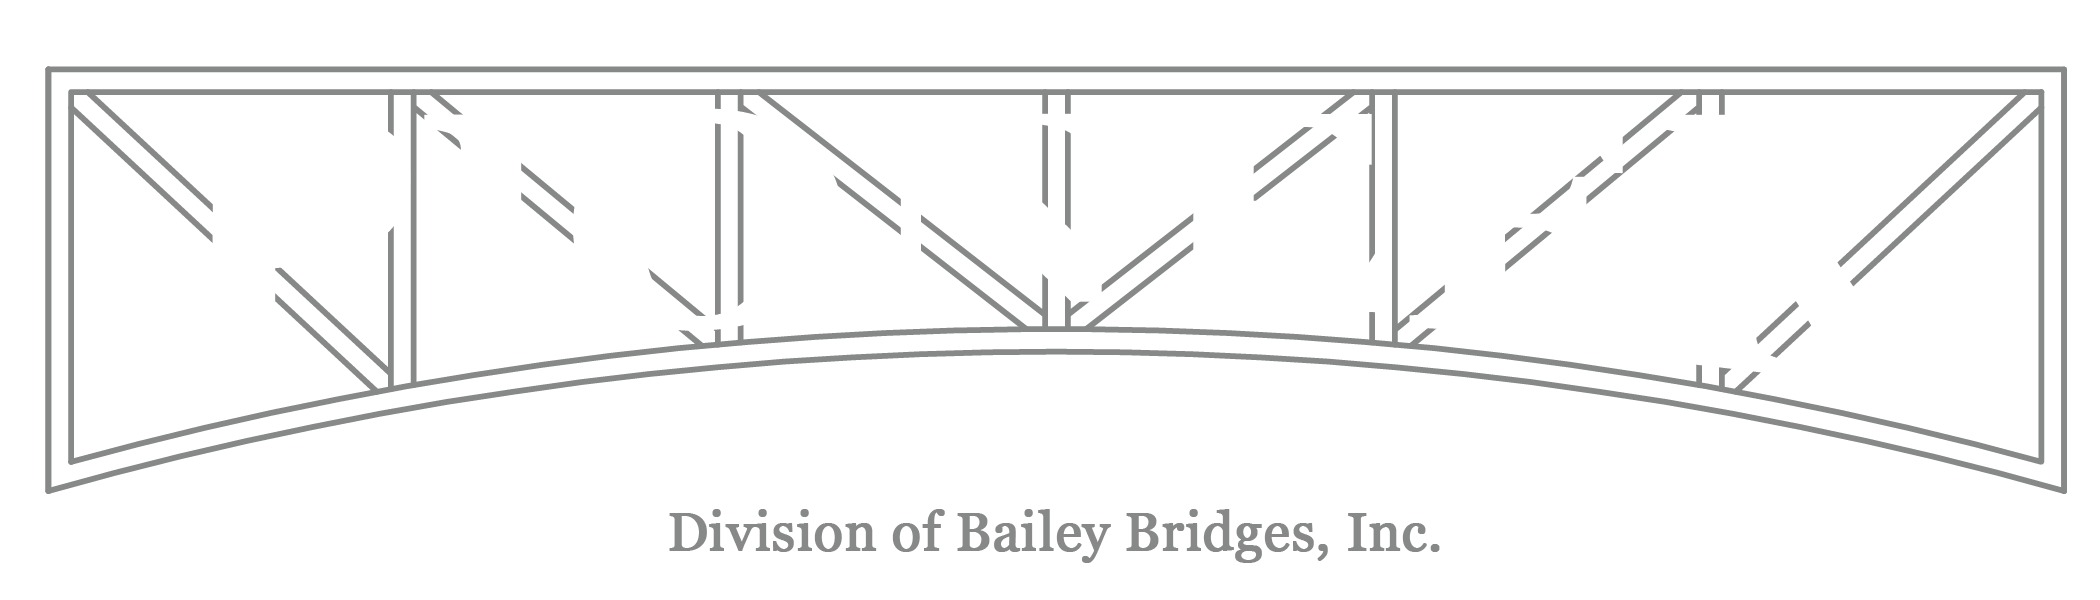 Pioneer Bridges - Pedestrian & Vehicular Prefabricated Steel Truss Bridges